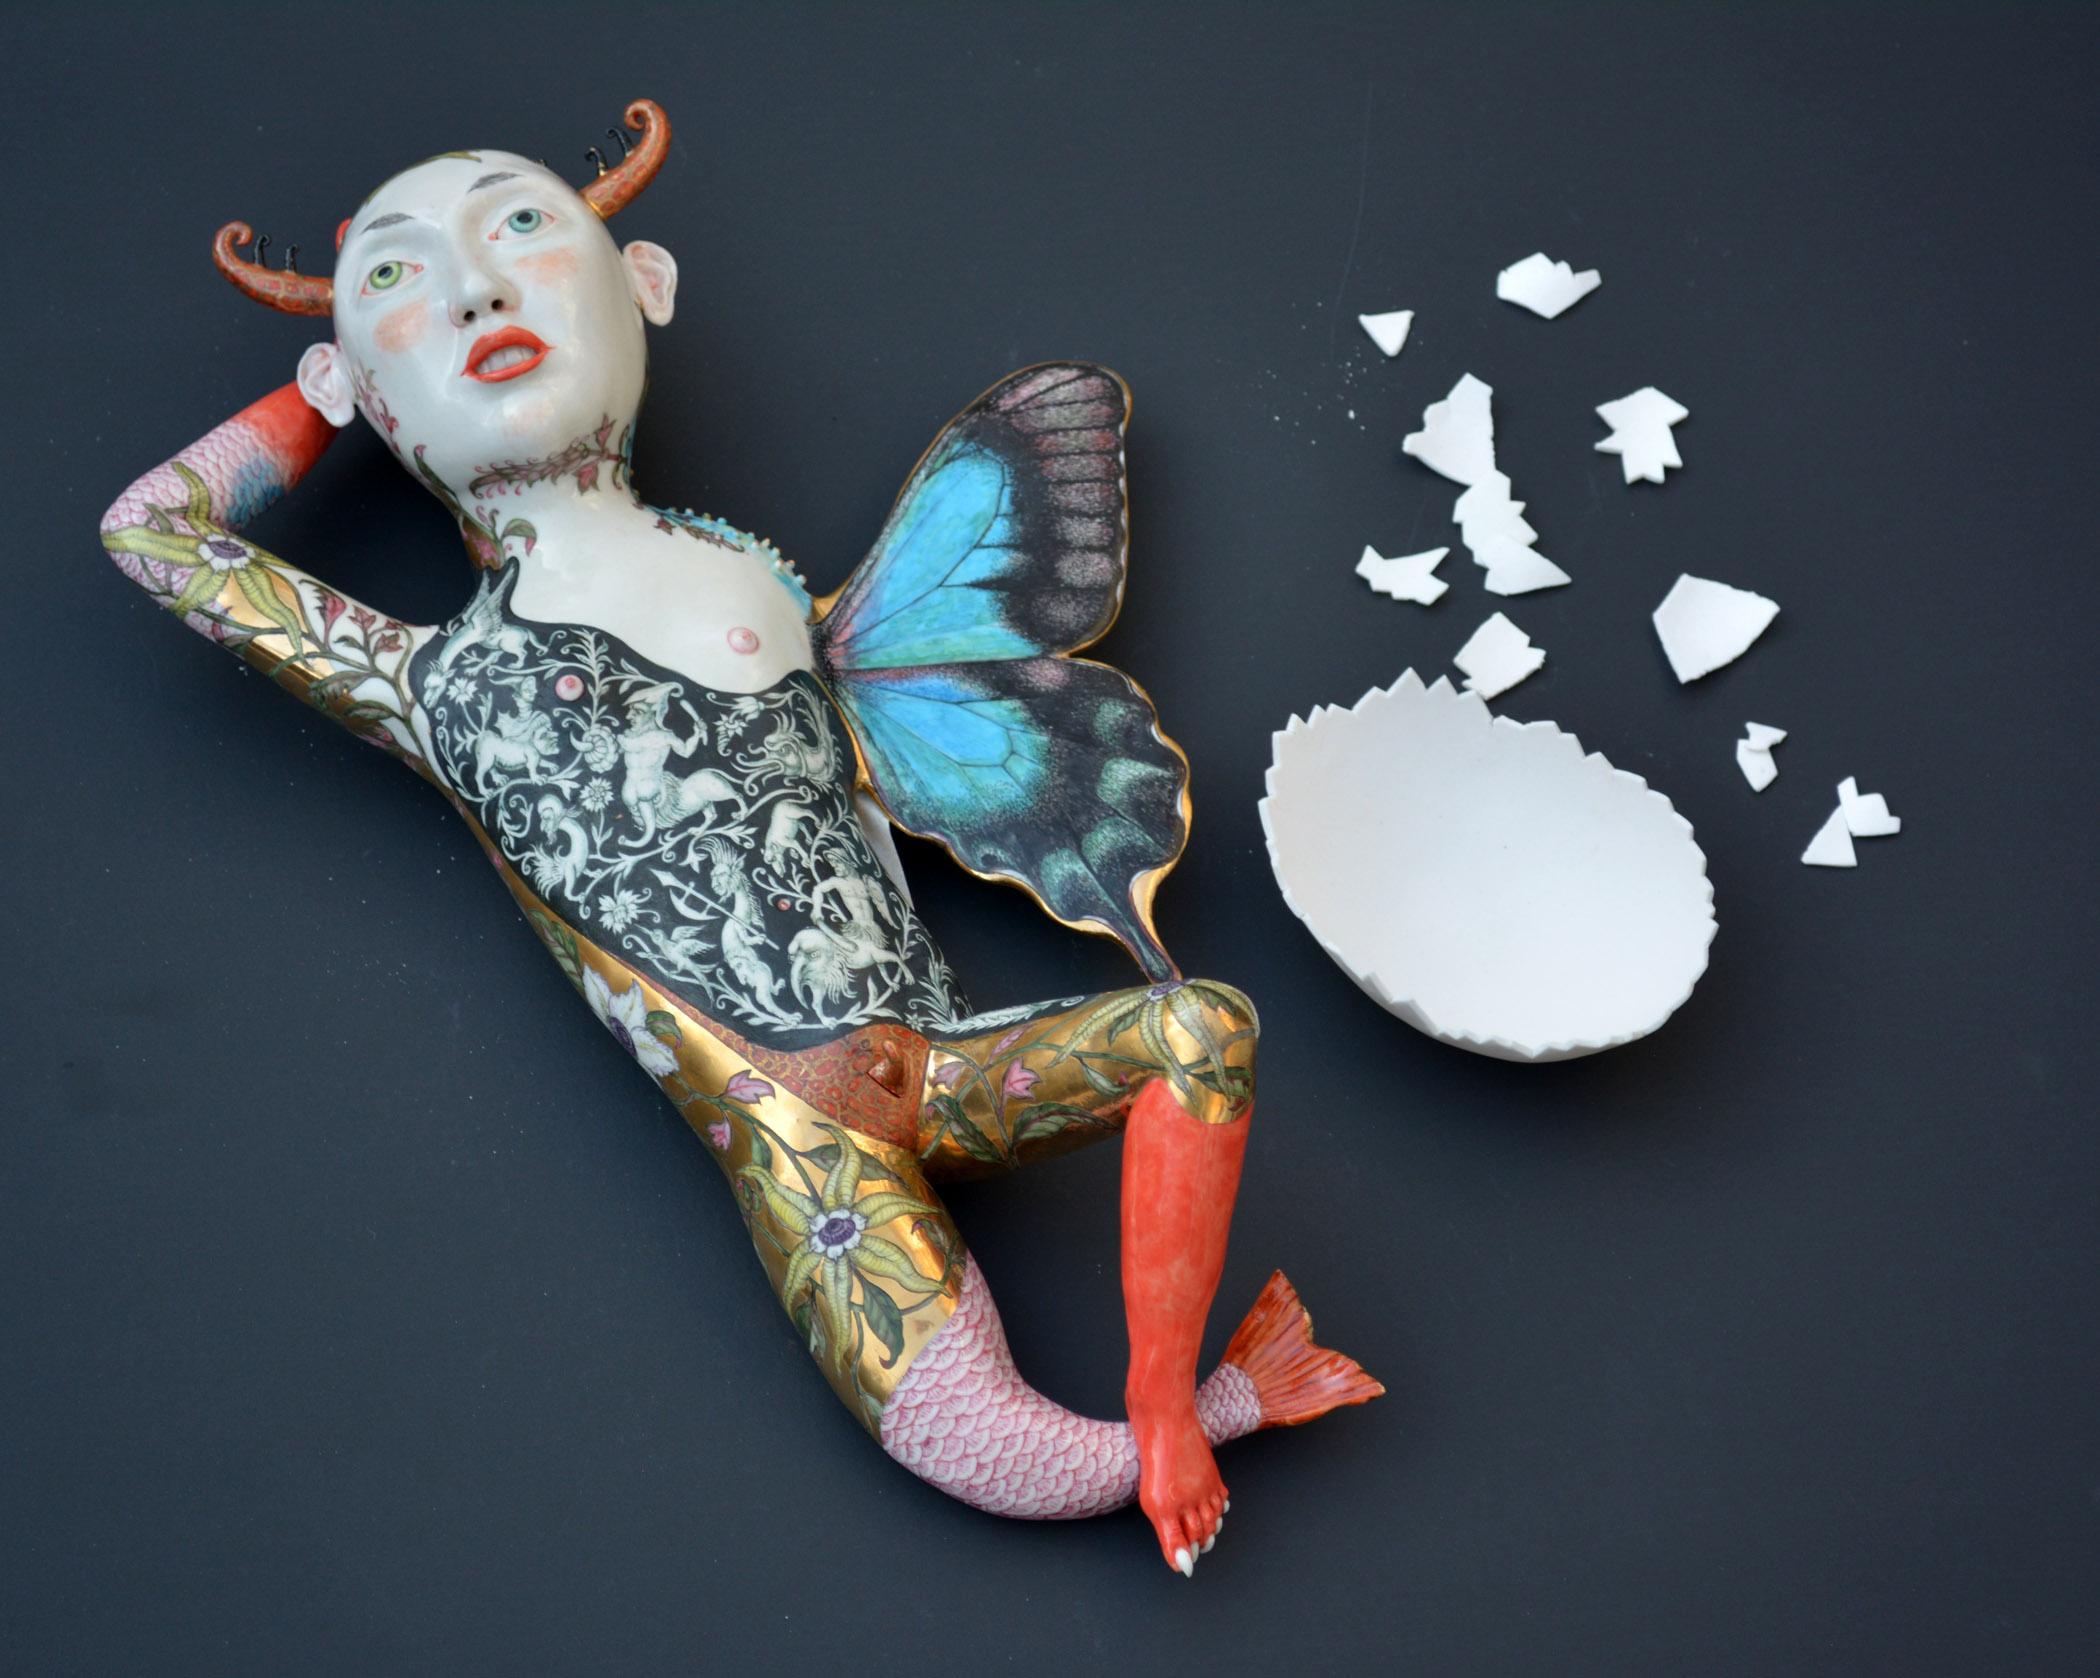 Irina Zaytceva Figurative Sculpture - "Changeling", Contemporary Porcelain Sculpture, Glazed and Painted Illustration